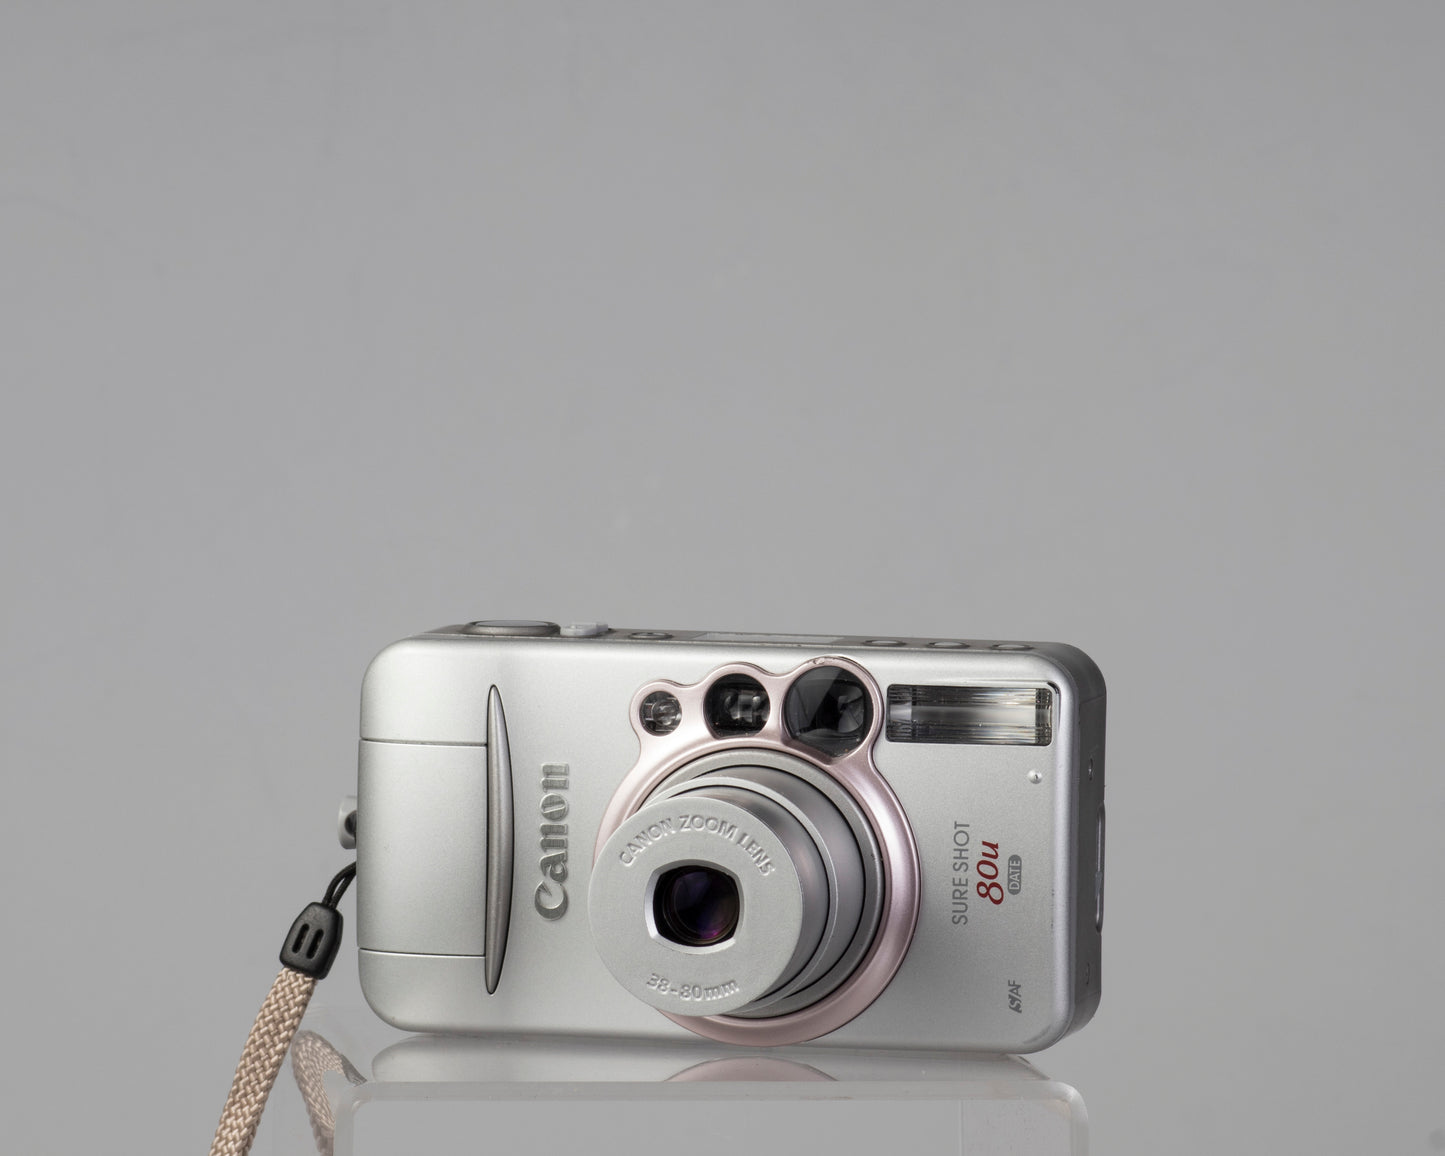 Canon Sure Shot 80u 35mm camera (serial 7607411)